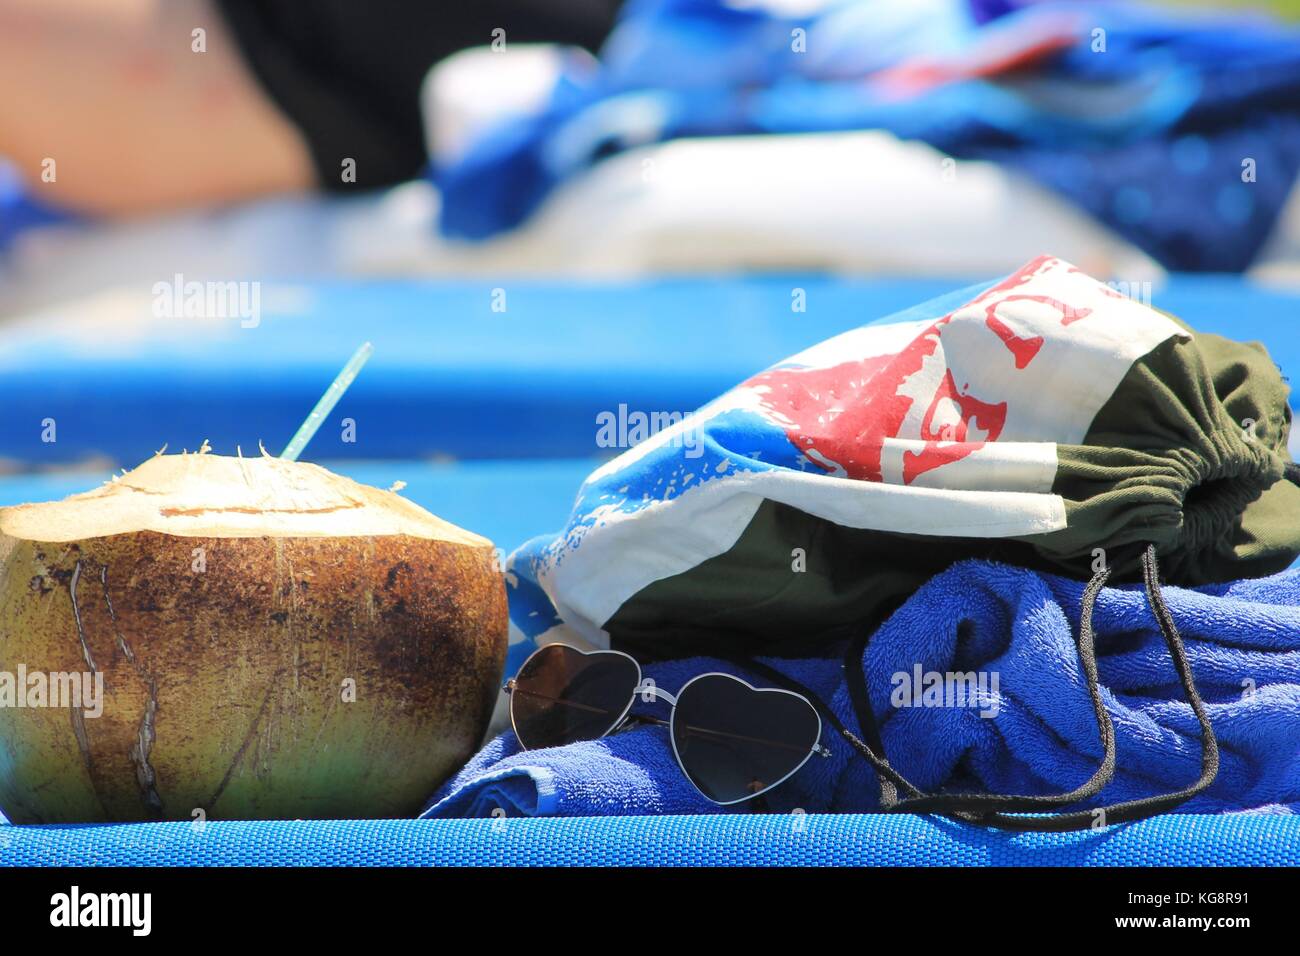 Cuban Beach Day Accessories on beach chair: coconut with straw, heart shaped sunglasses, Cuba beach bag, and beach towel Stock Photo